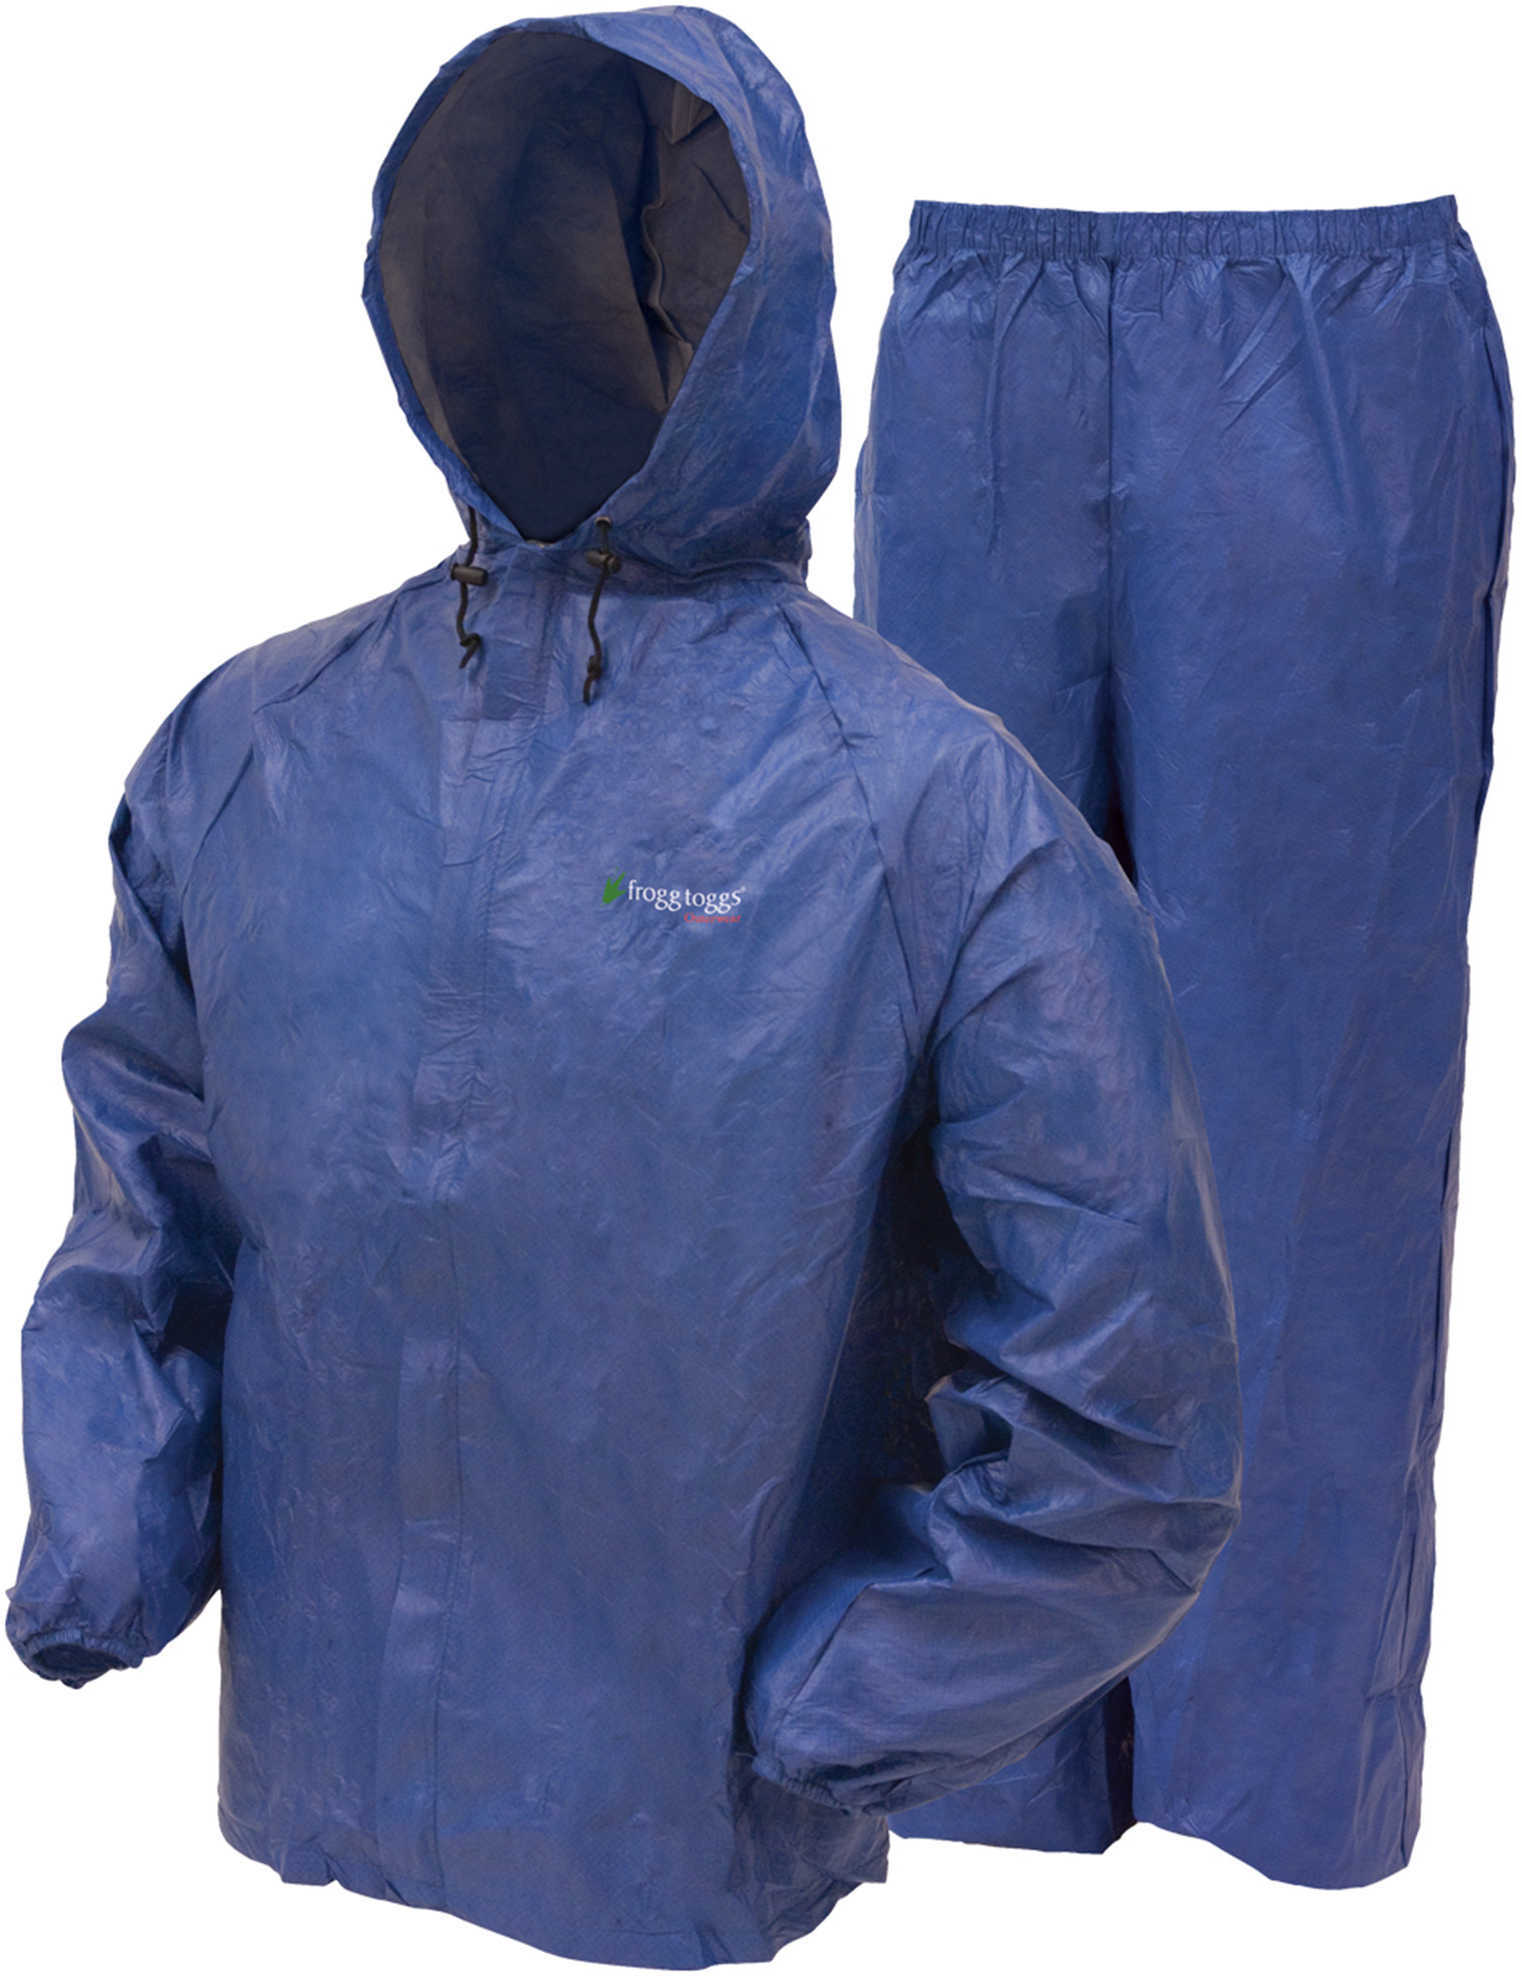 Frogg Toggs Ultra-Lite2 Rain Suit w/Stuff Sack X-Large, Royal Blue UL12104-12XL